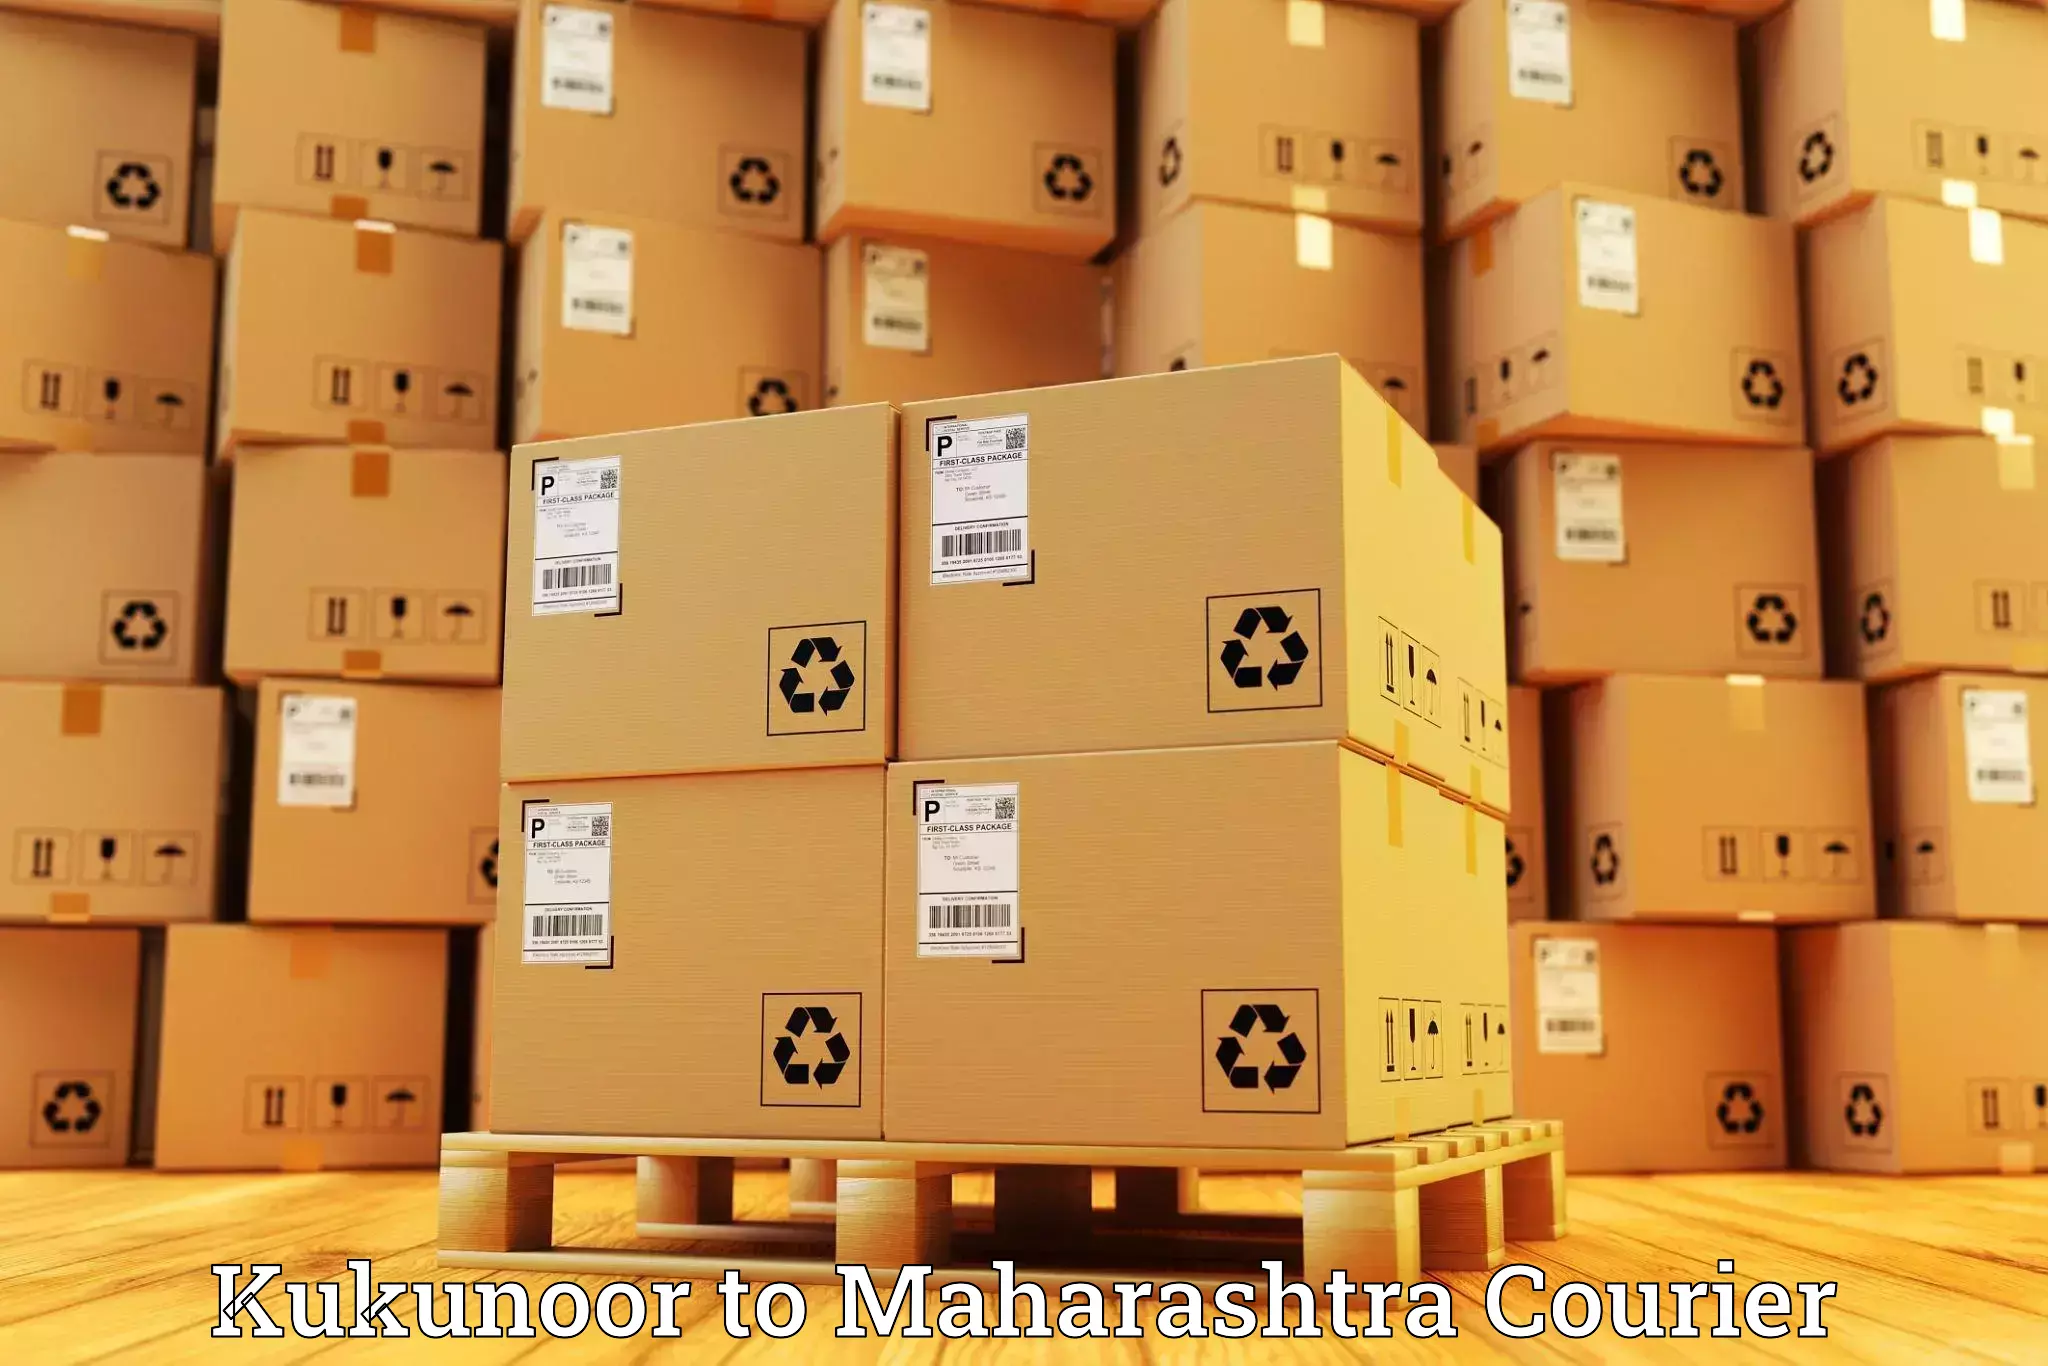 Global shipping networks Kukunoor to Nandurbar